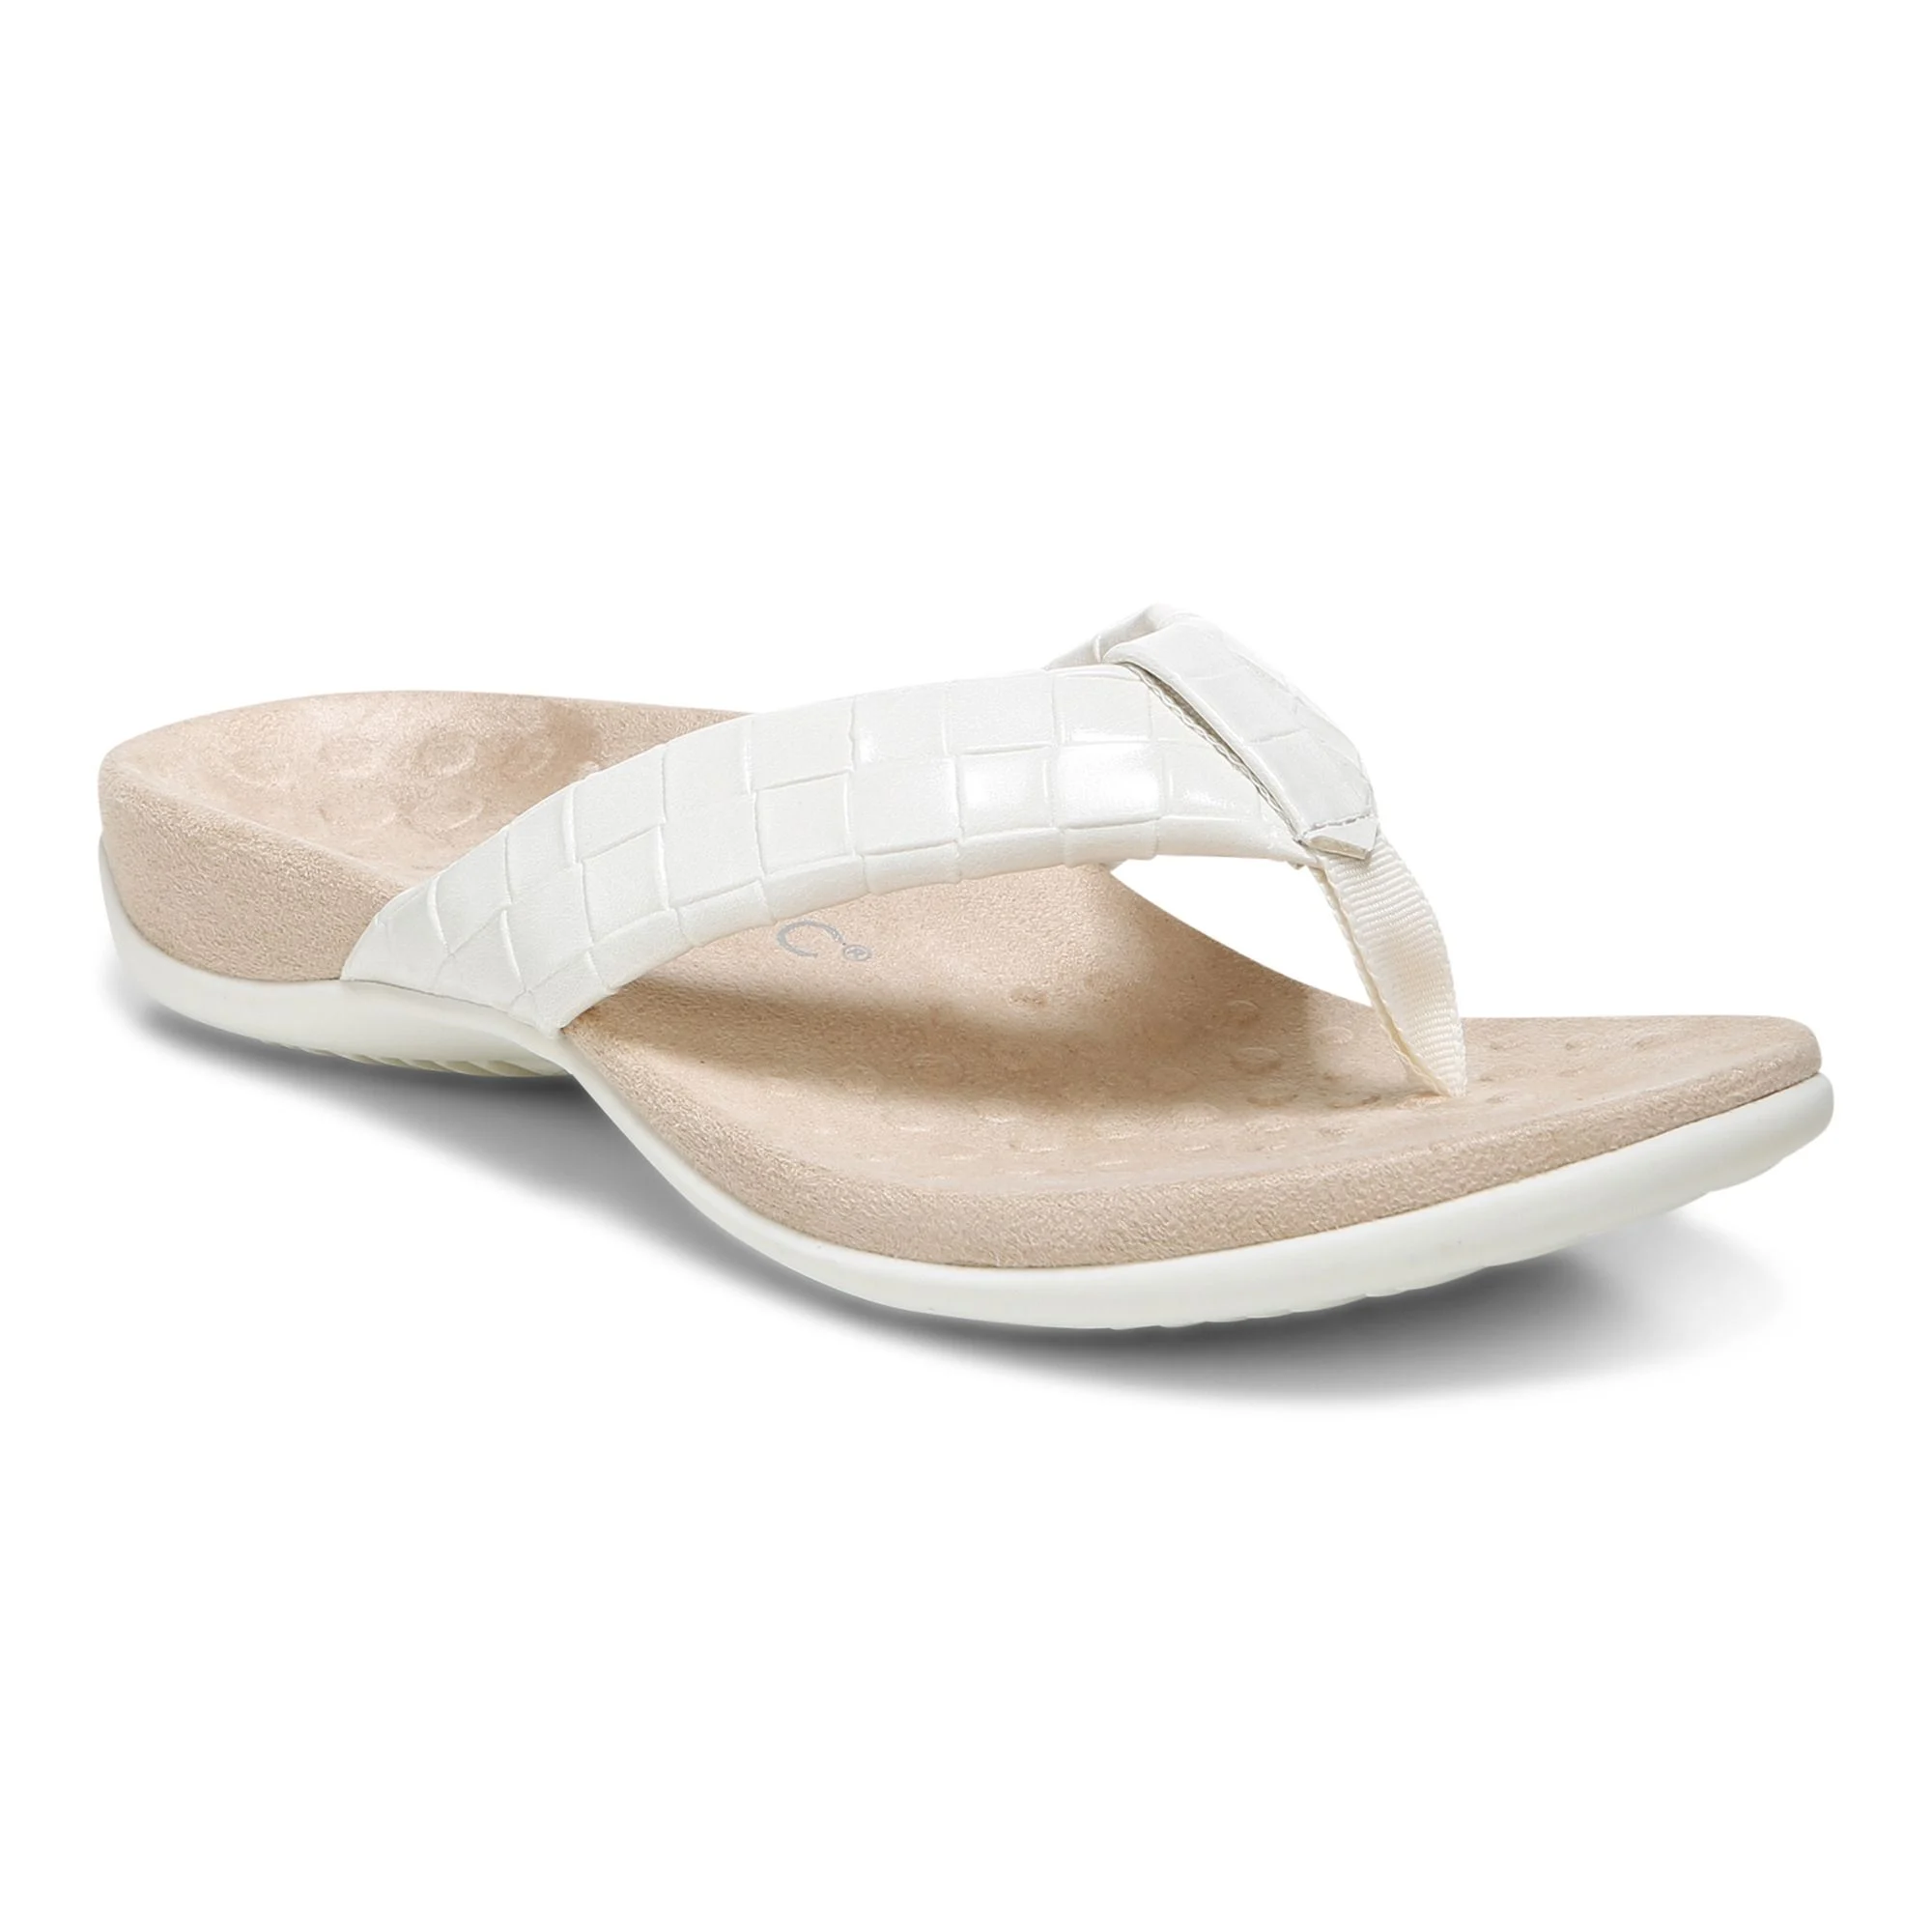 Women's Vionic Layne Toe Post Sandal - Cream | Stan's Fit For Your Feet